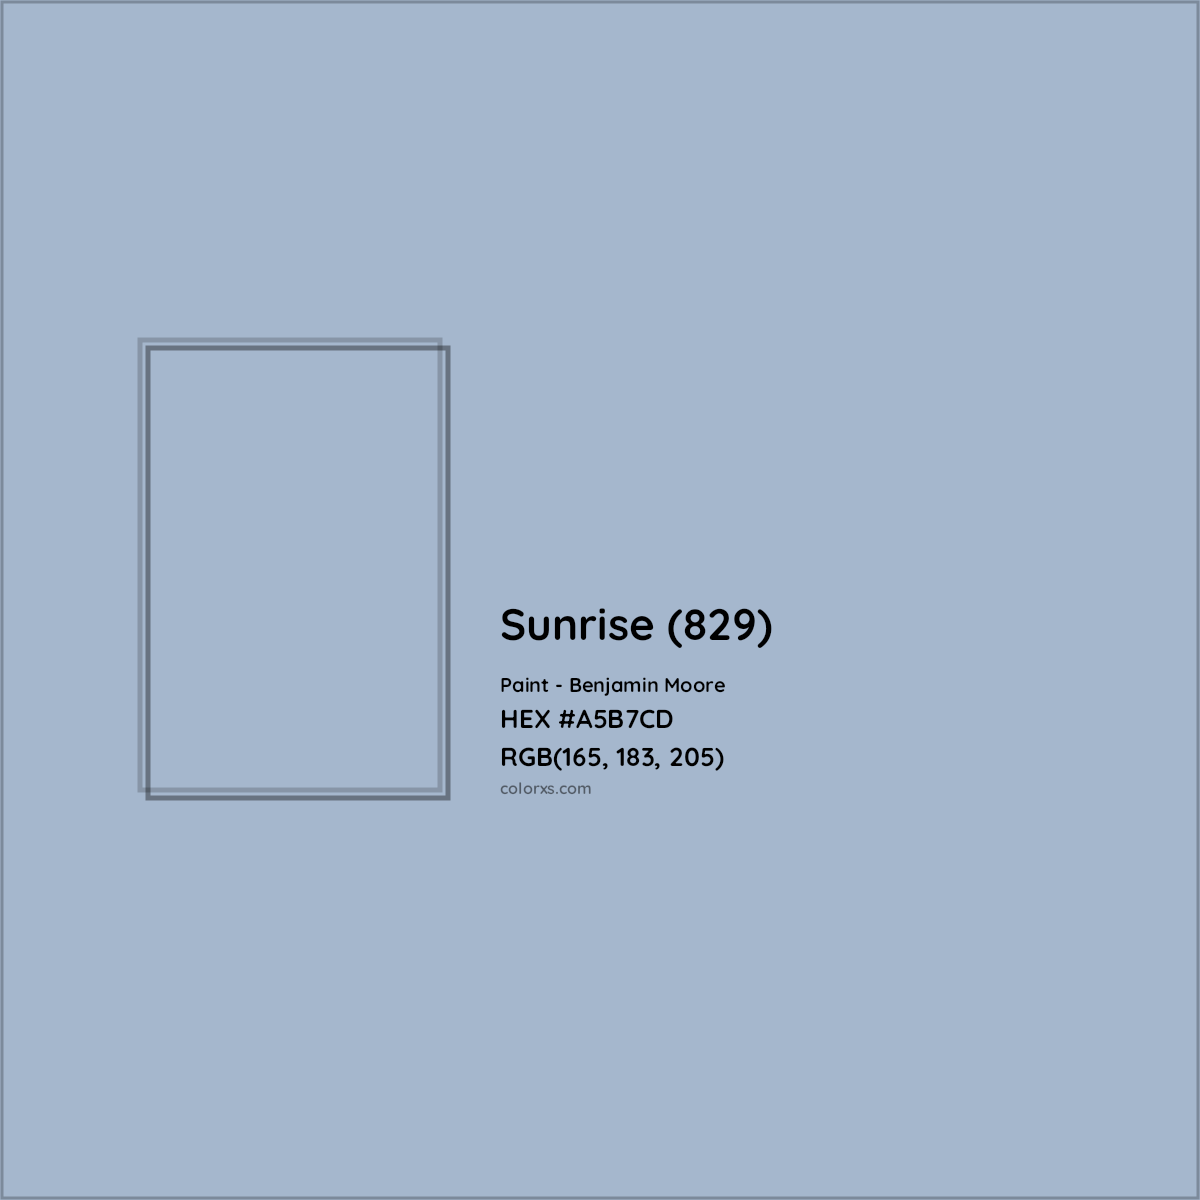 HEX #A5B7CD Sunrise (829) Paint Benjamin Moore - Color Code